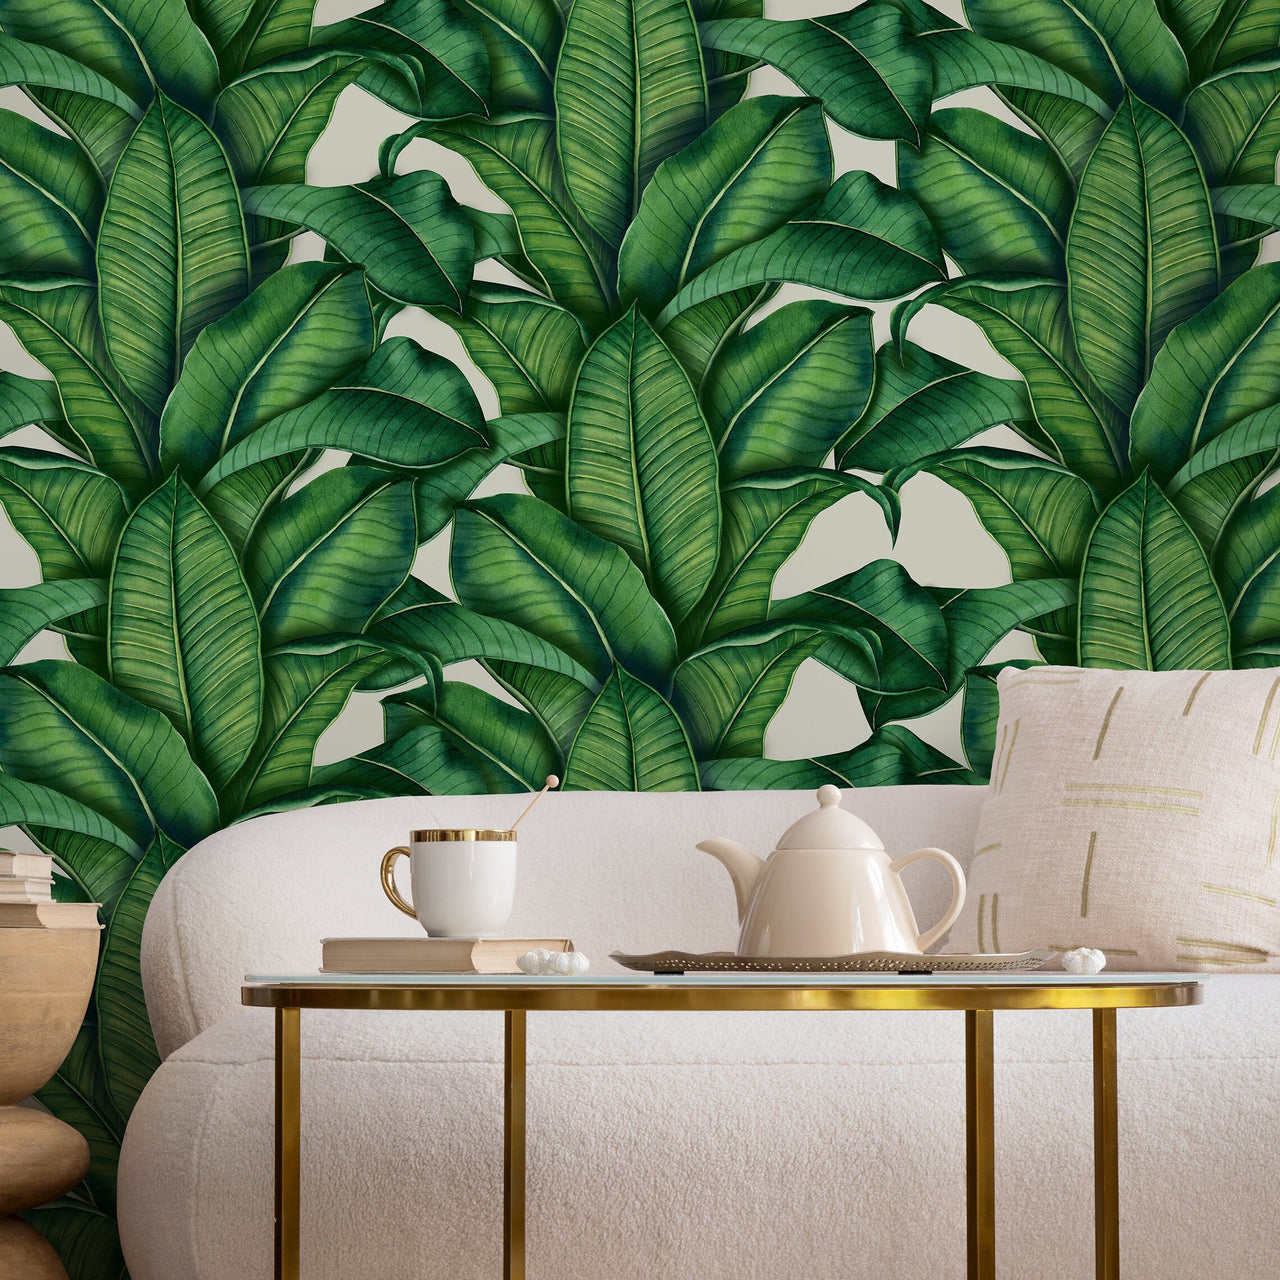 Wallpaper Peel and Stick Wallpaper Removable Wallpaper Home Decor Wall Art Wall Decor Room Decor / Tropical Banana Leaf Wallpaper - A256